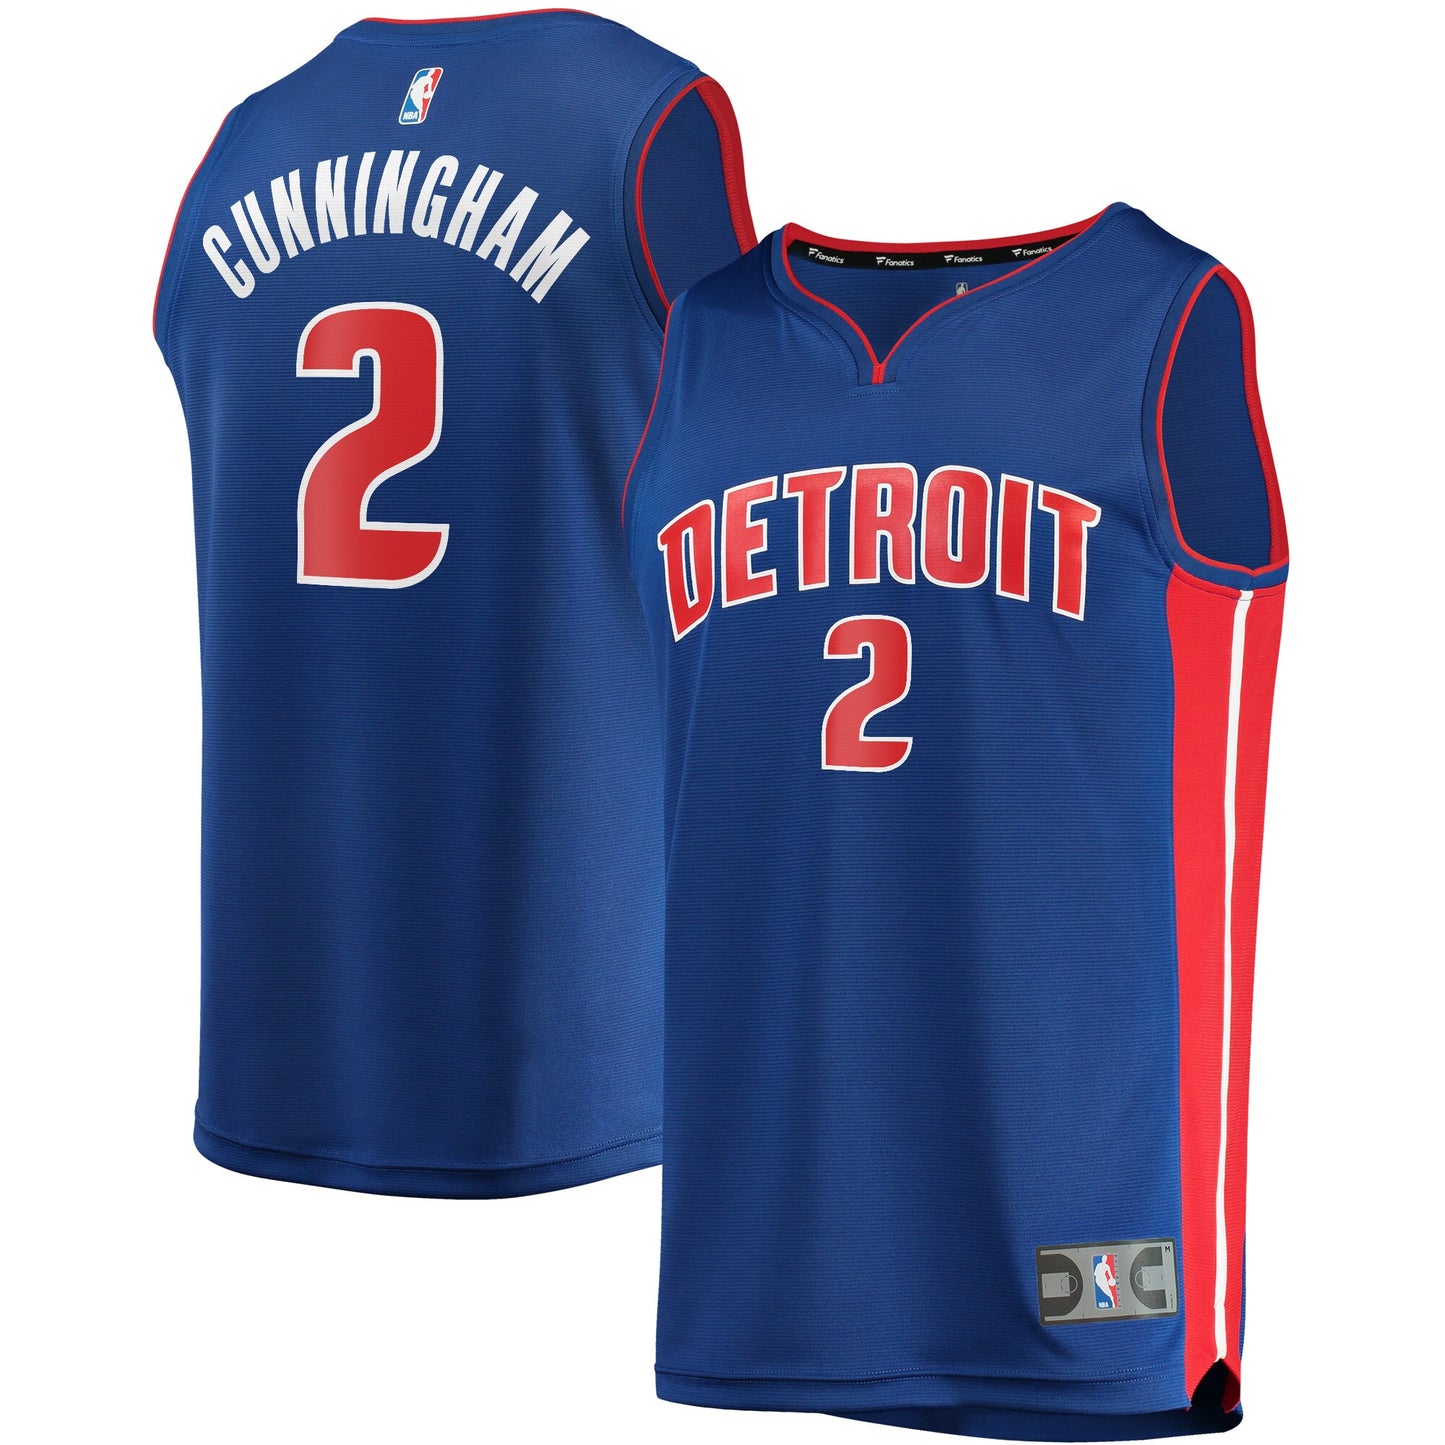 Cade Cunningham Detroit Pistons Fanatics Branded 2021 NBA Draft First Round Pick Fast Break Replica Jersey Blue - Icon Edition